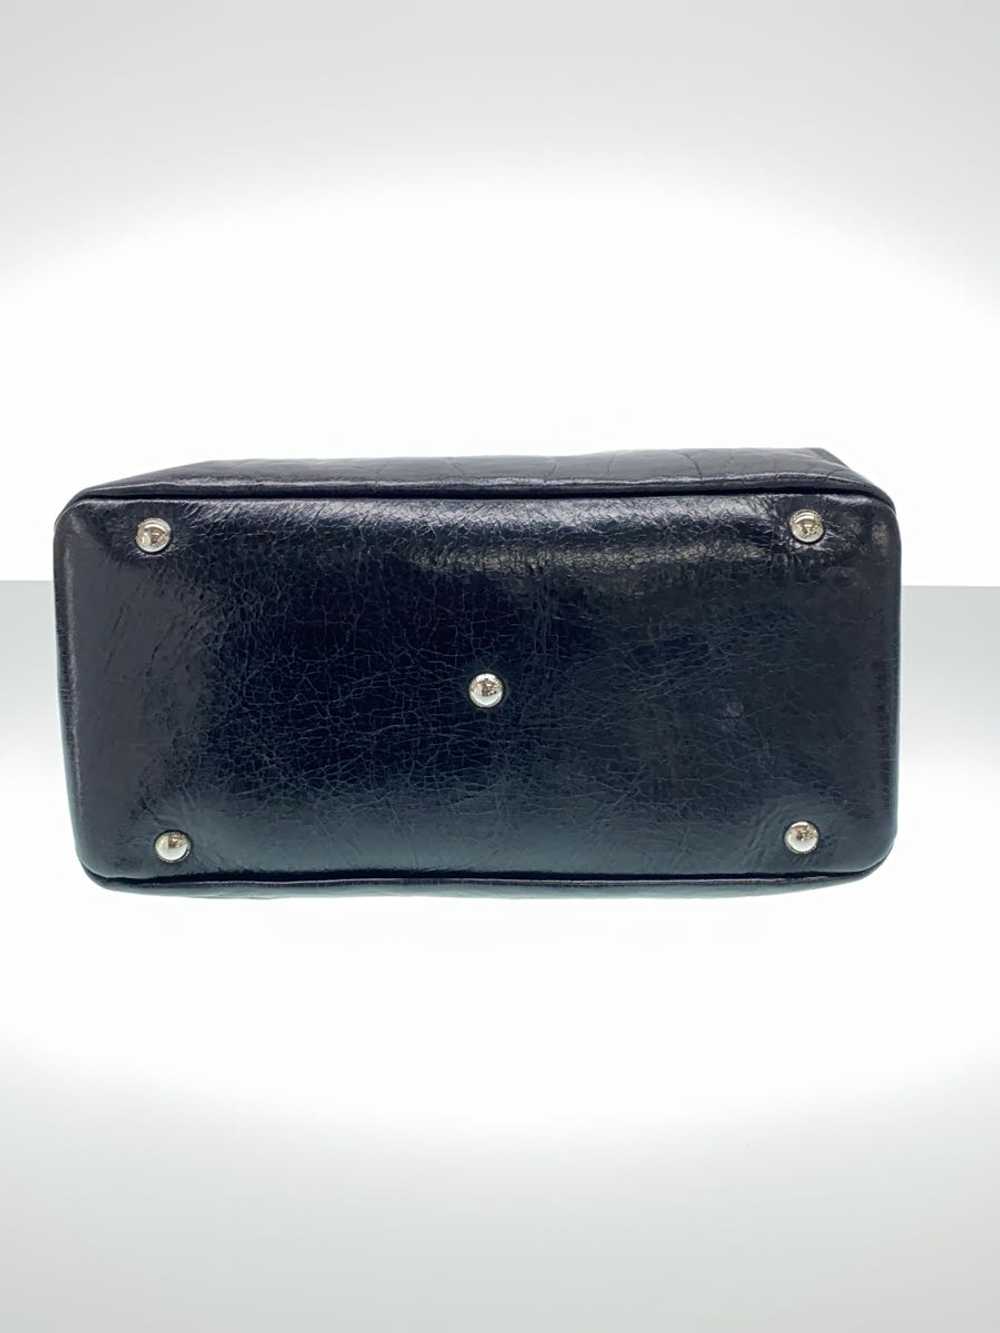 MIUMIU Tote Bag/Leather/Blk Bag - image 4